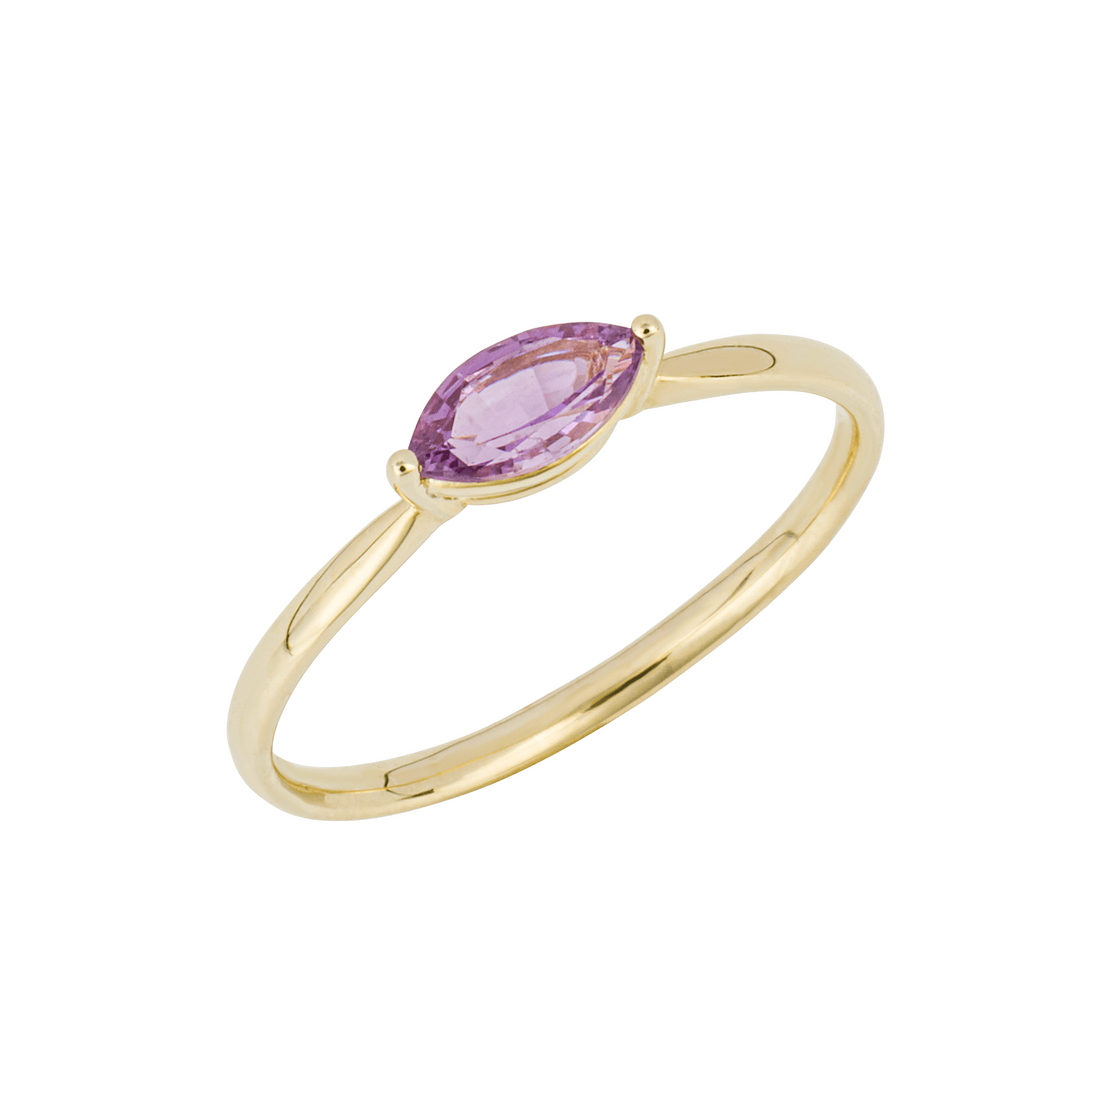 Navette Cut Purple Sapphire Ring in 9ct Yellow Gold - Robert Anthony Jewellers, Edinburgh